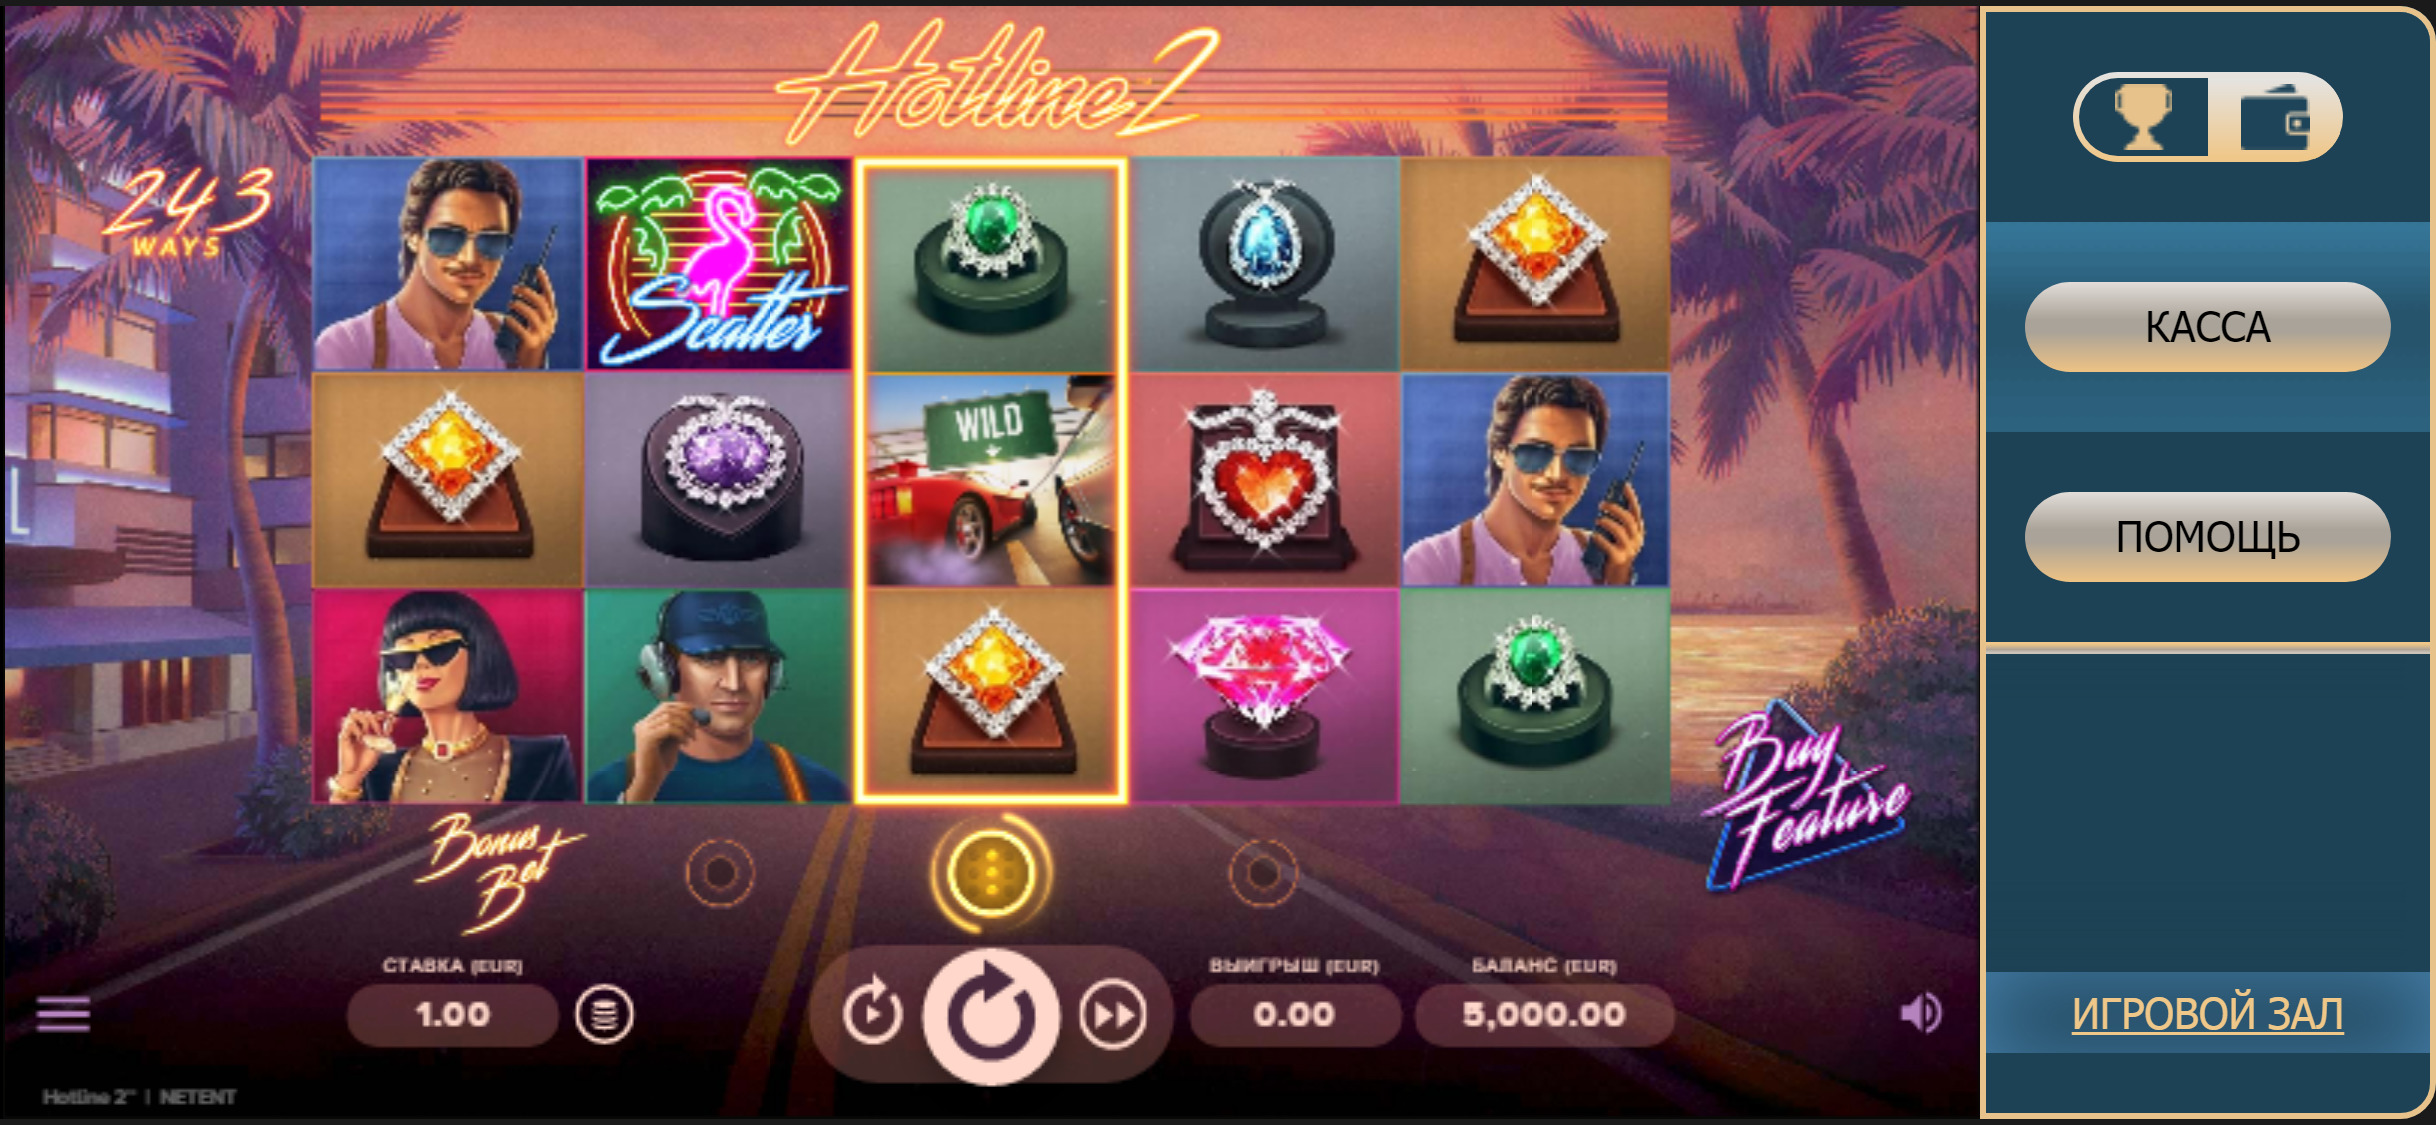 Rox Casino Mobile Slot Games Review